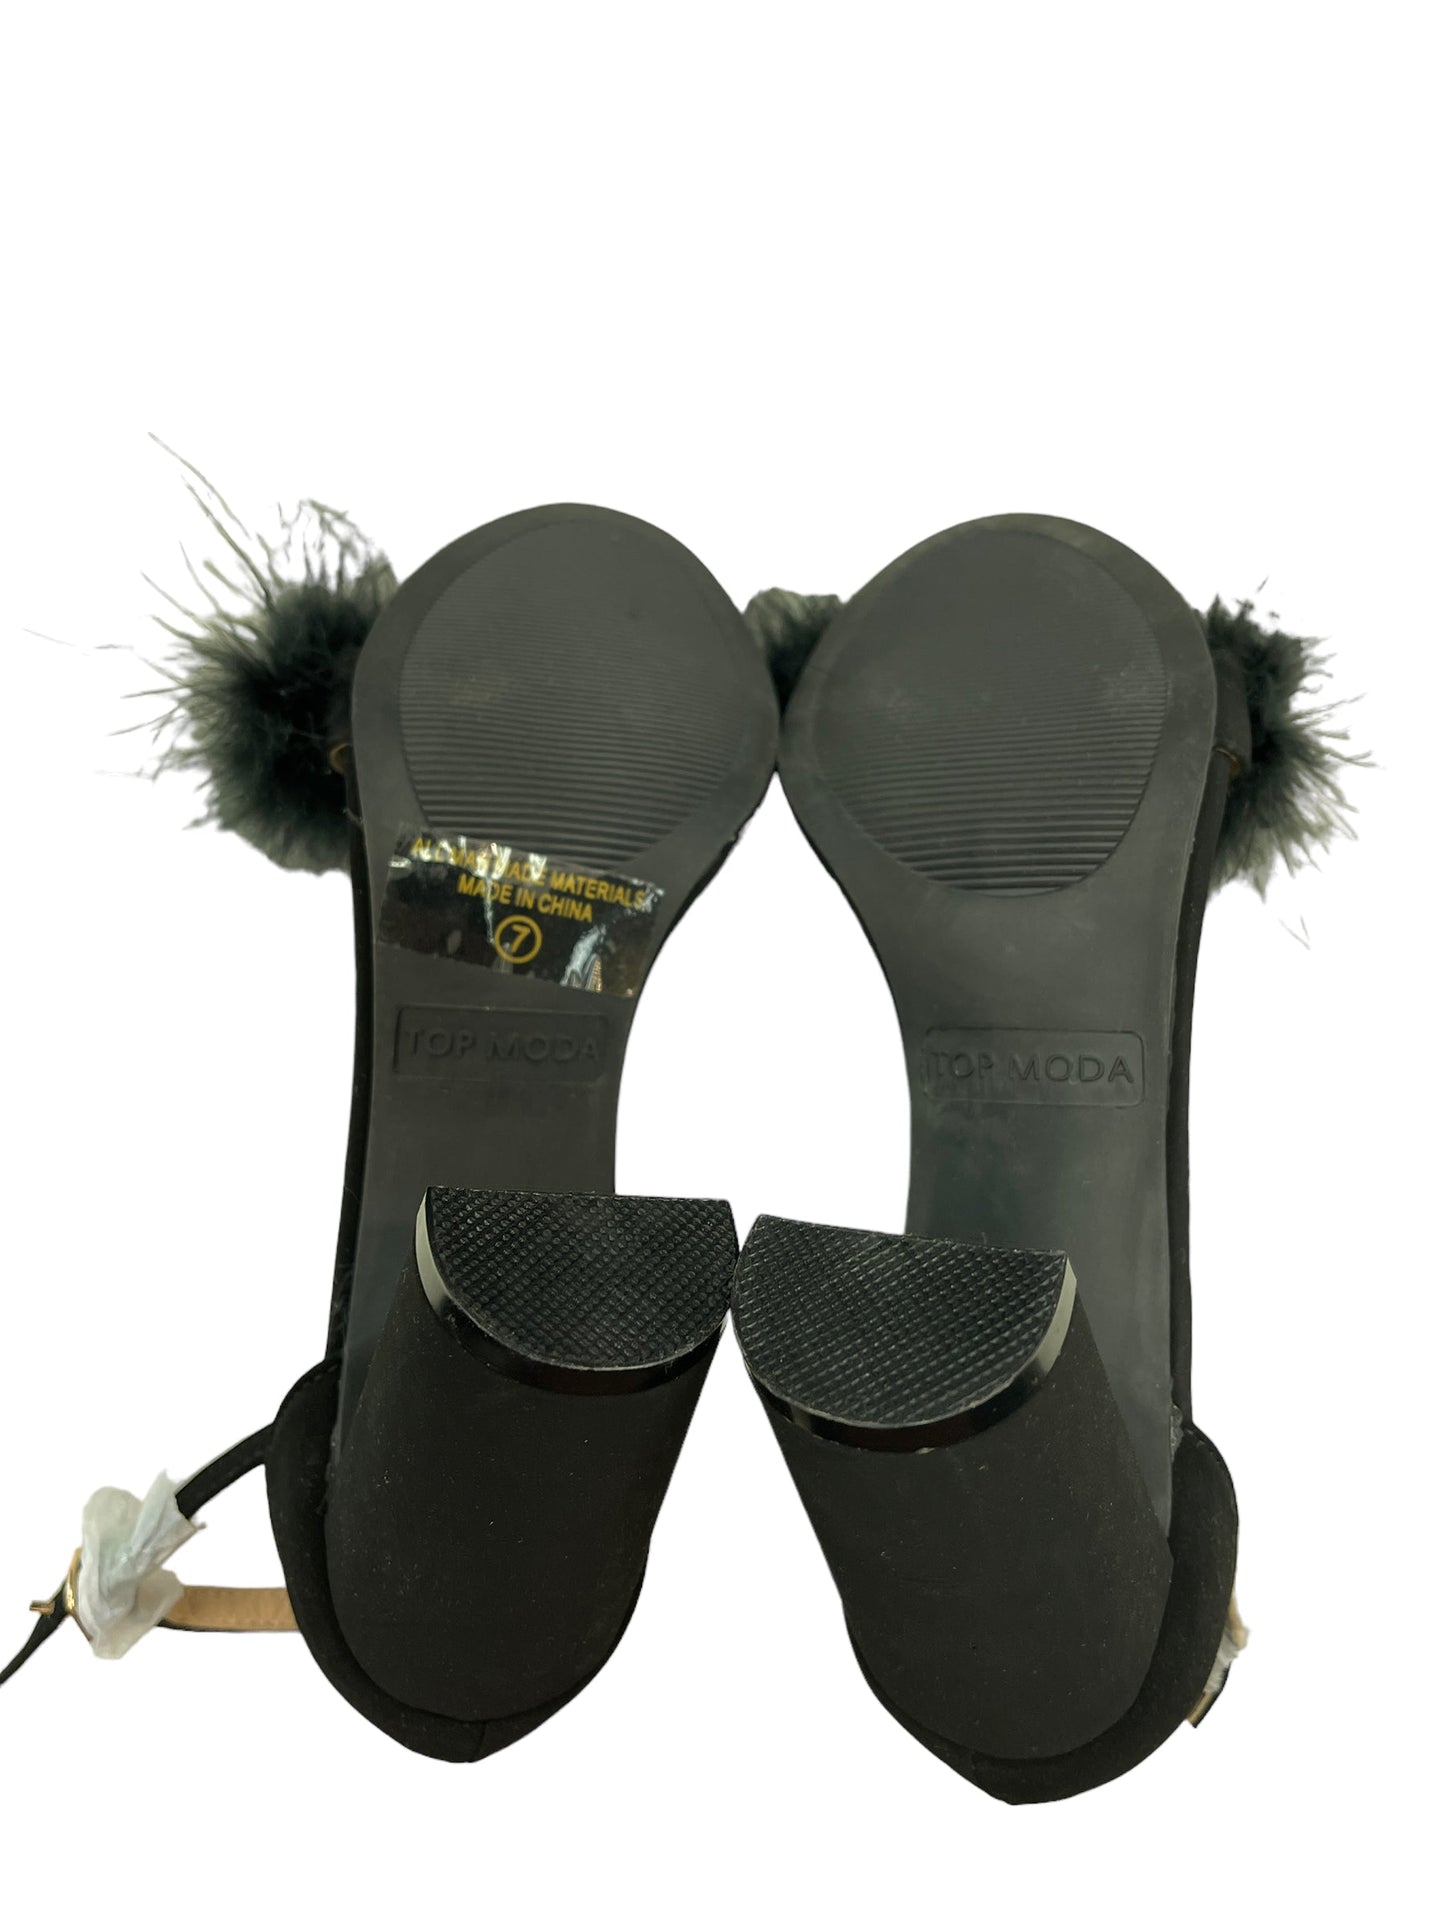 Sandals Heels Wedge By Top Moda  Size: 7